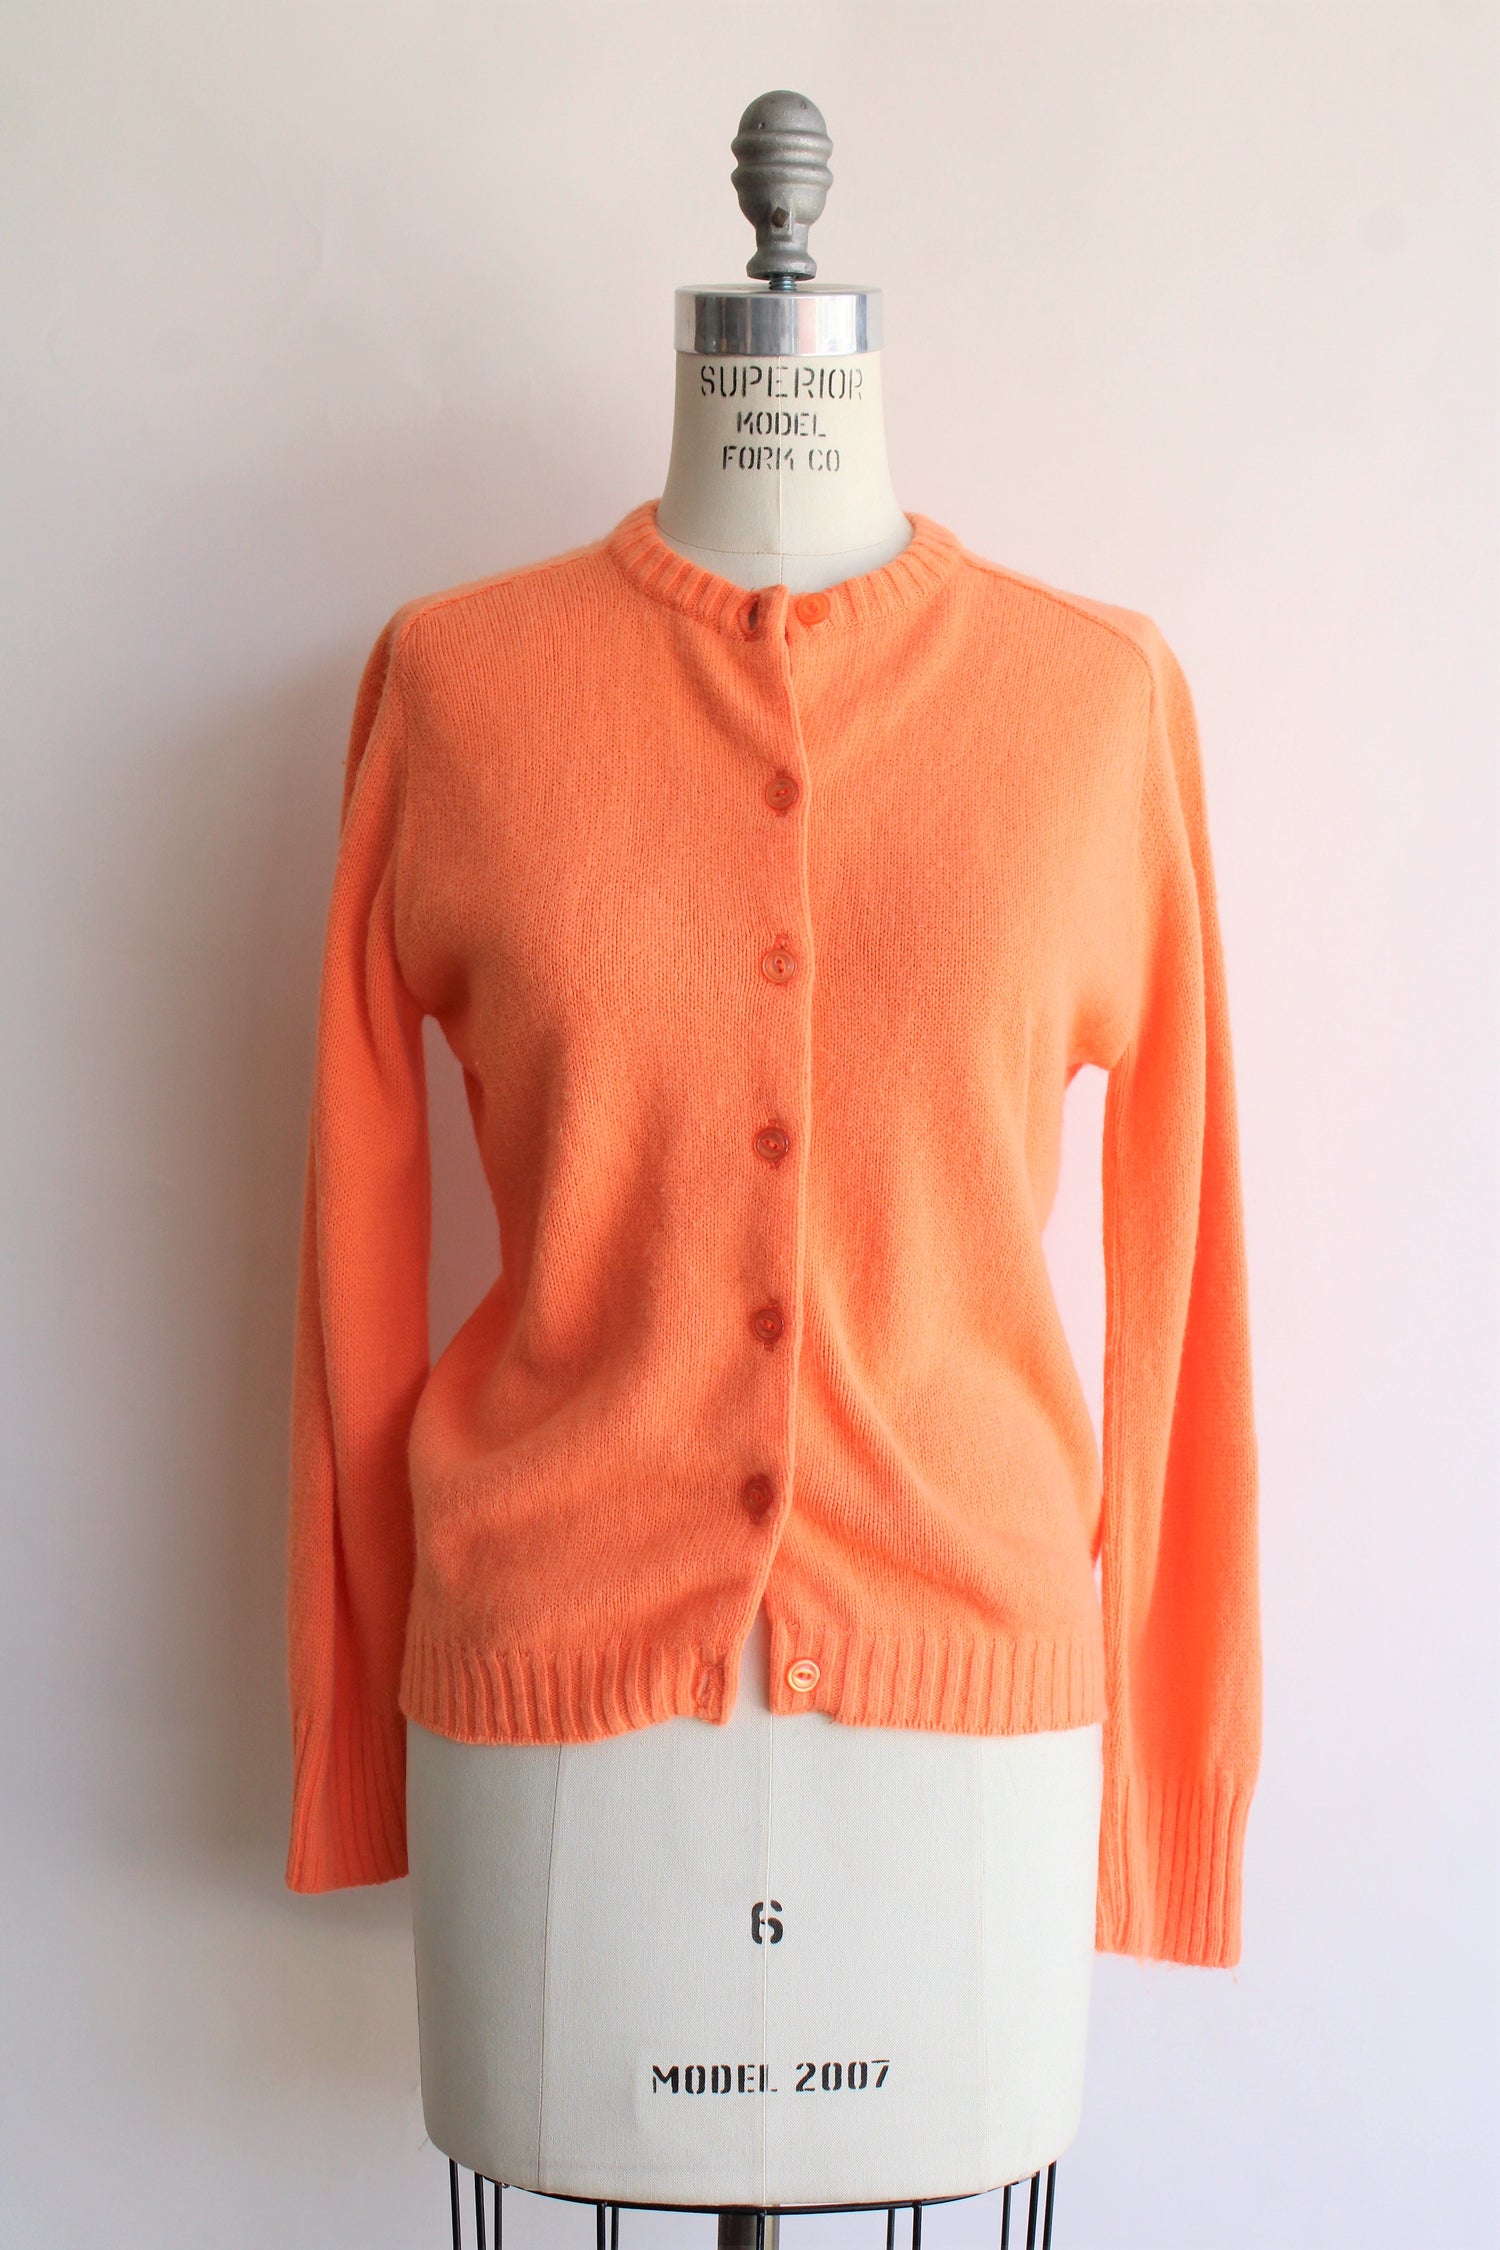 Vintage 1960s 1970s Orange Cardigan Sweater